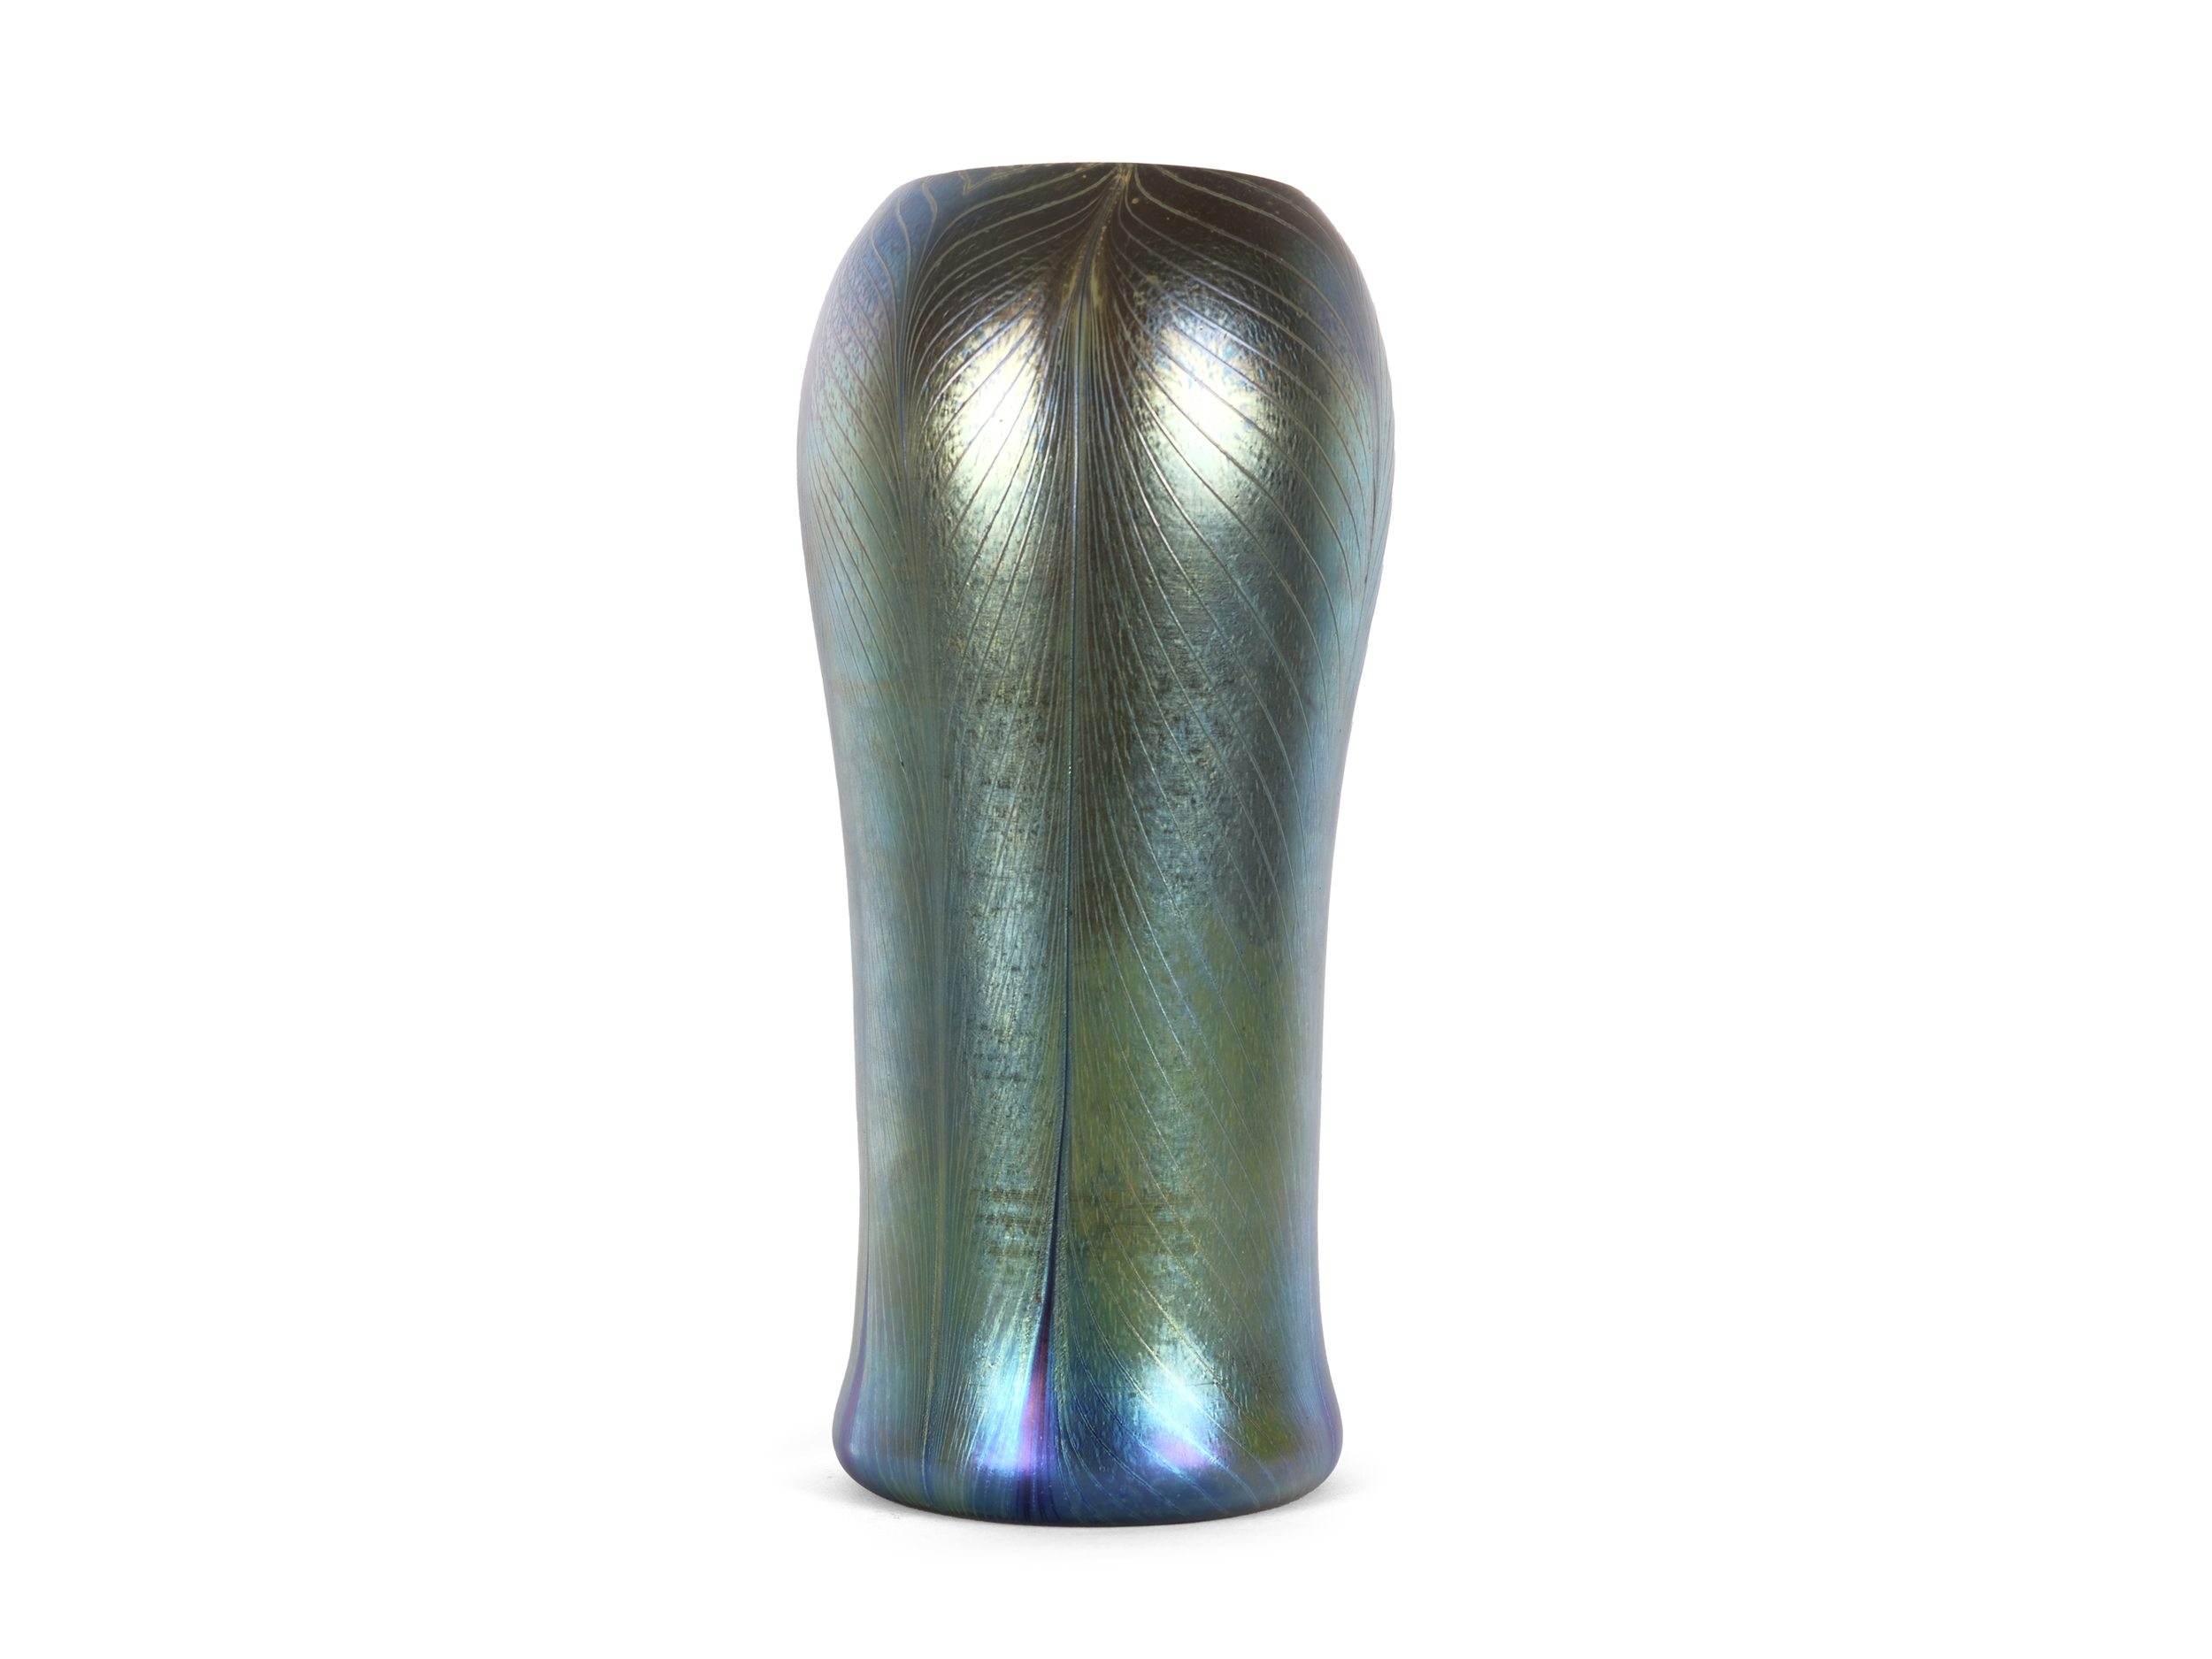 Louis Comfort Tiffany, Peacock Vase - Image 3 of 6